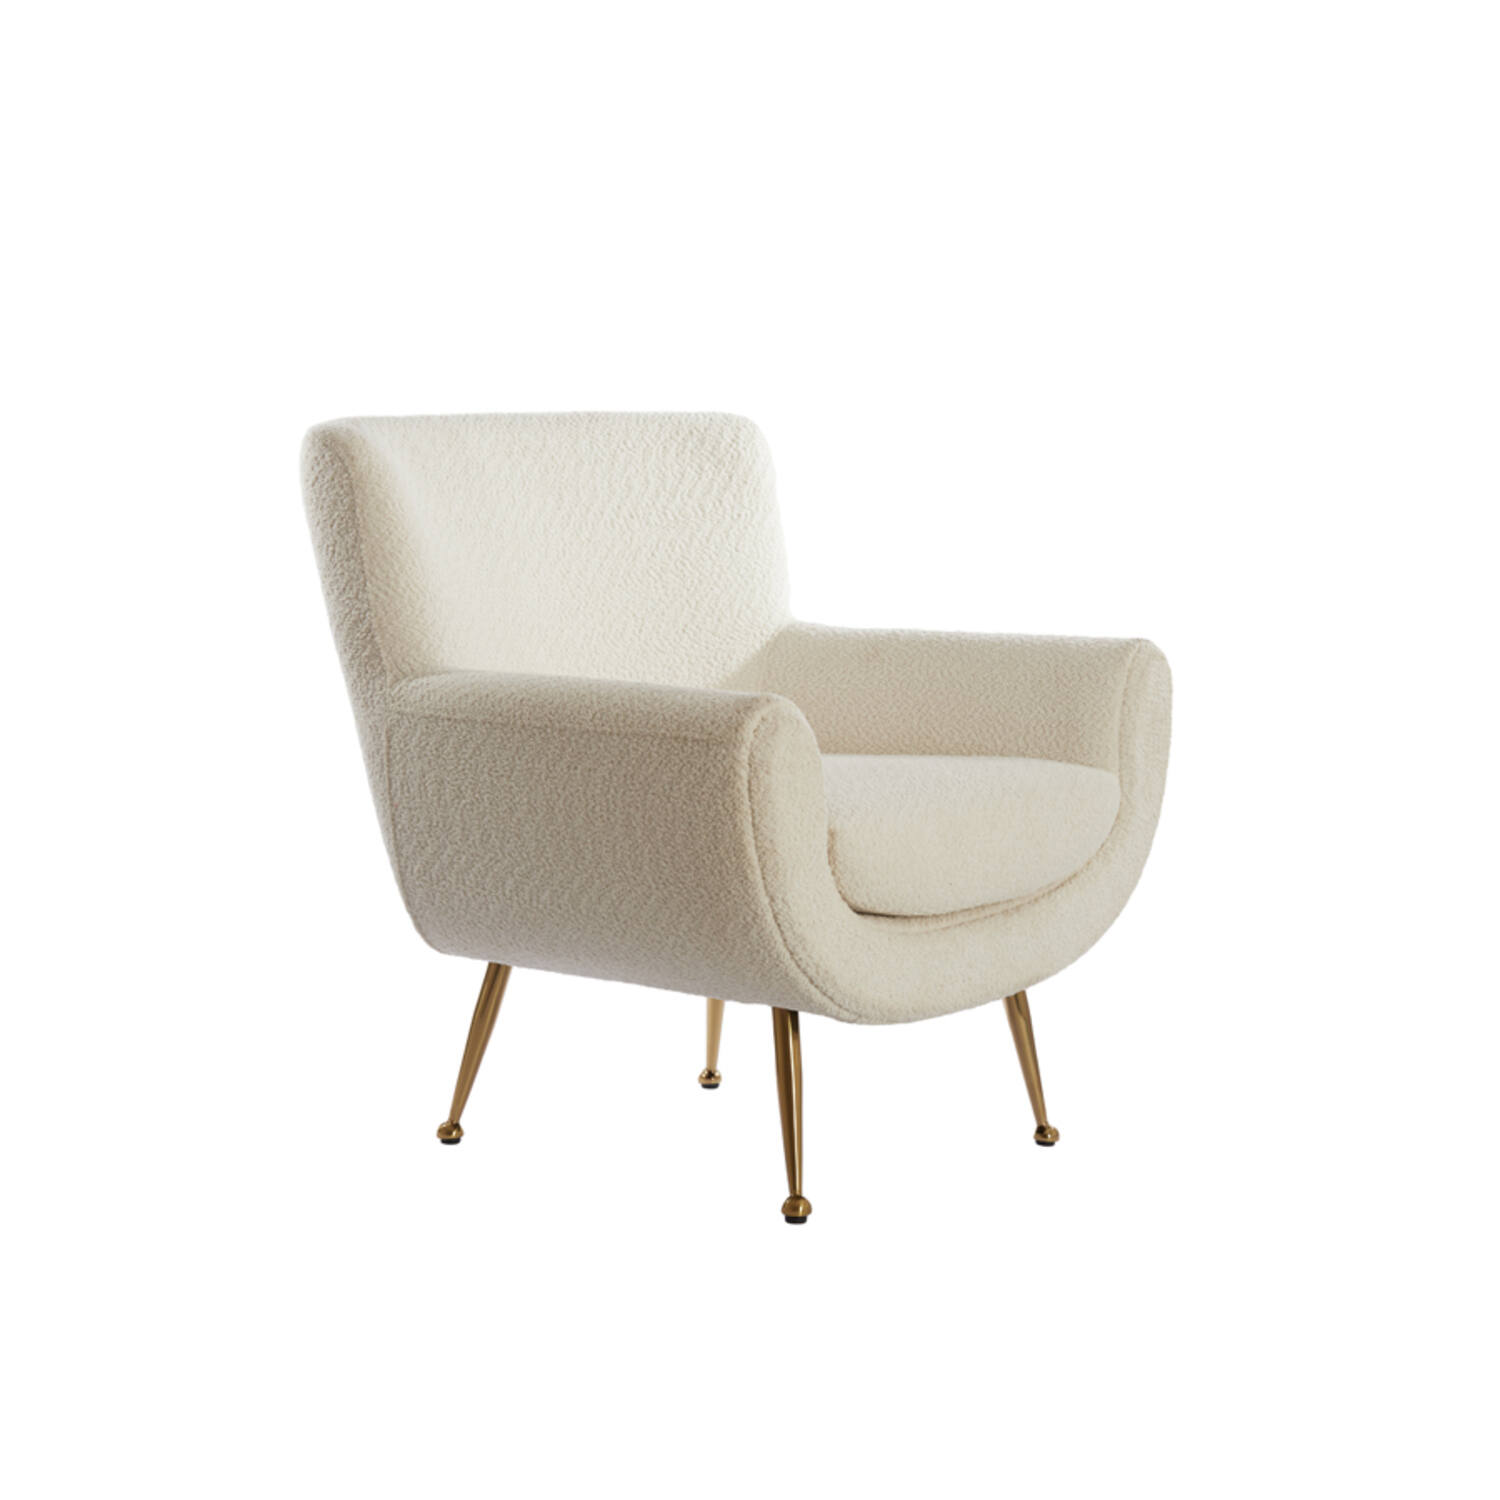 Chair 79x76x79 cm VINSTRA bouclé white+gold